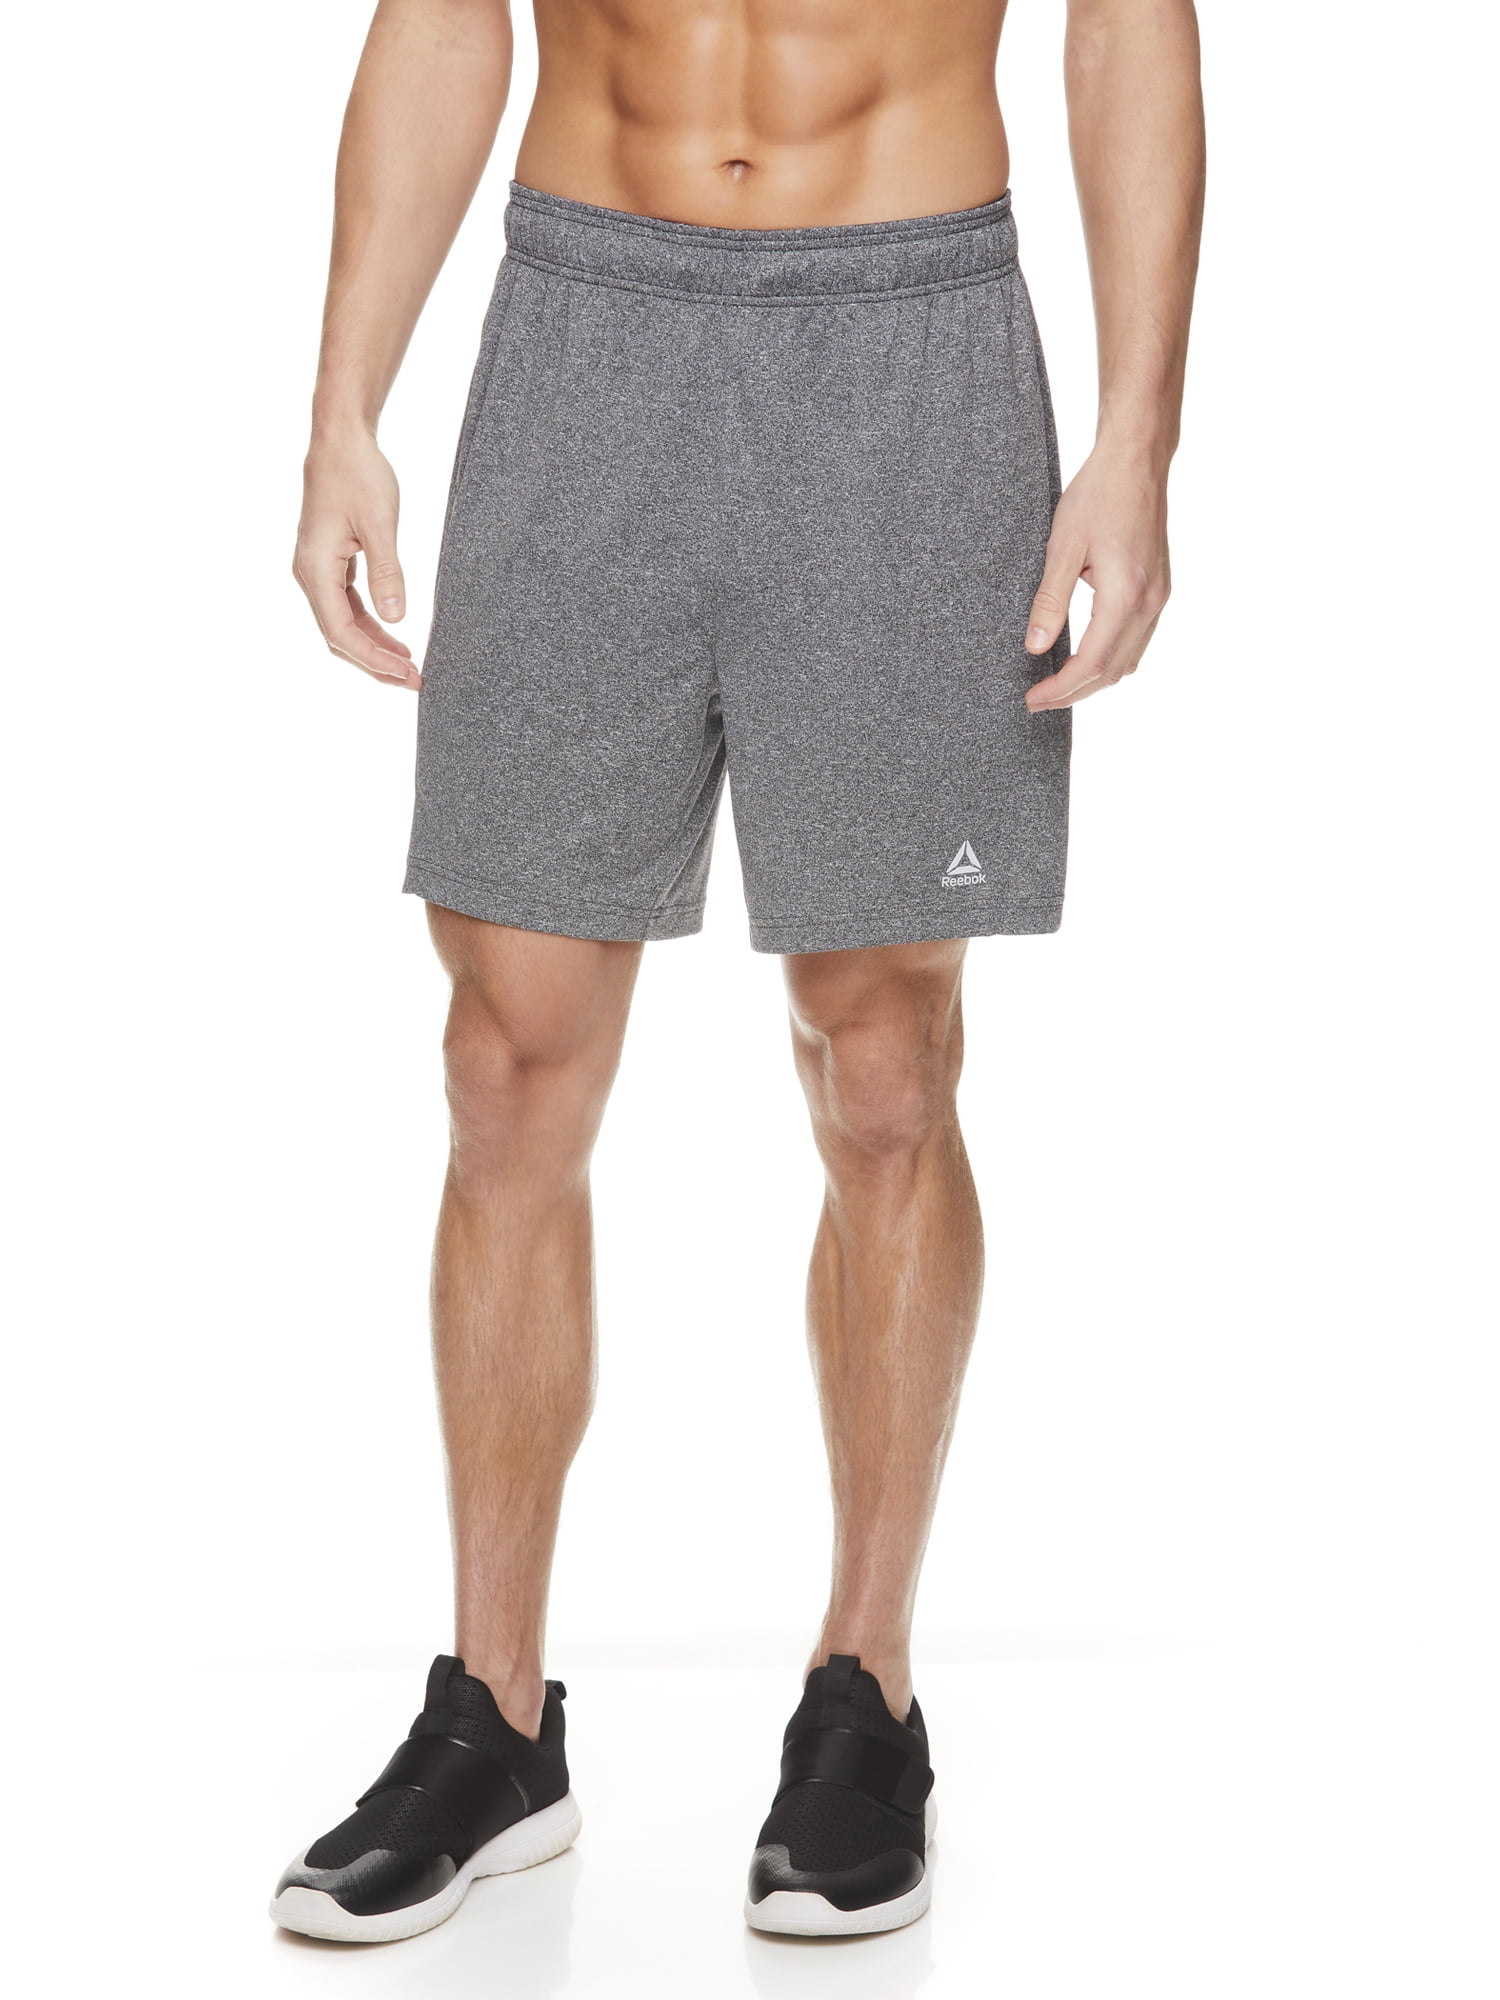 Medium Athletic Running & Workout Short Reebok Mens Drawstring Shorts Charcoal Fireball Grey 